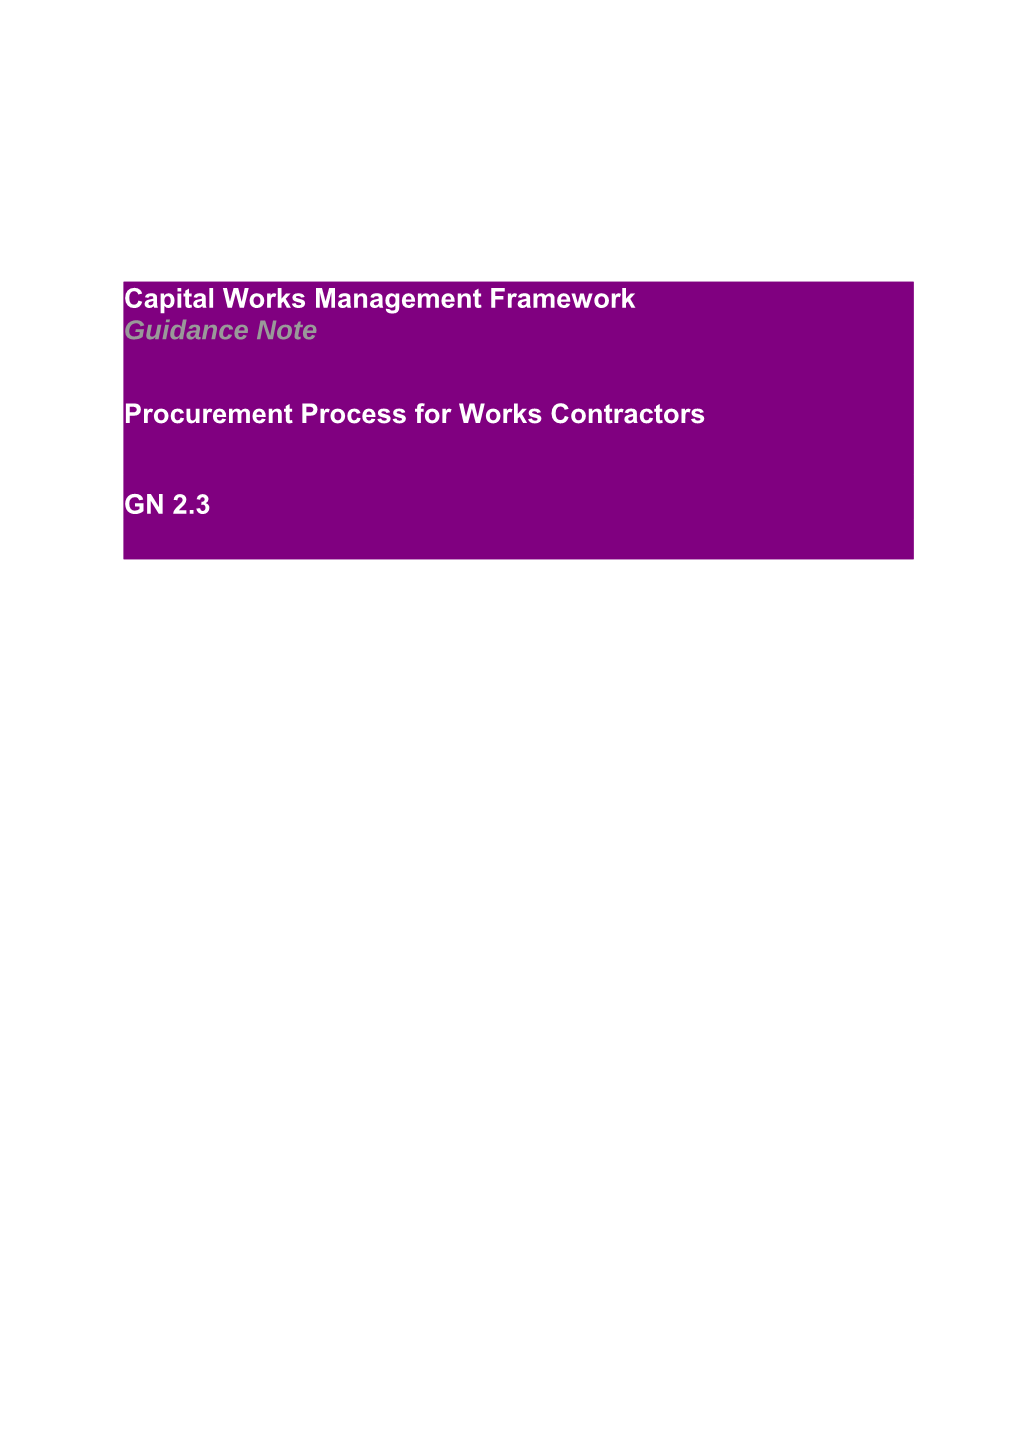 Procurement Process for Works Contractors Document Reference GN 2.3. V.1.1. 22 December 2010